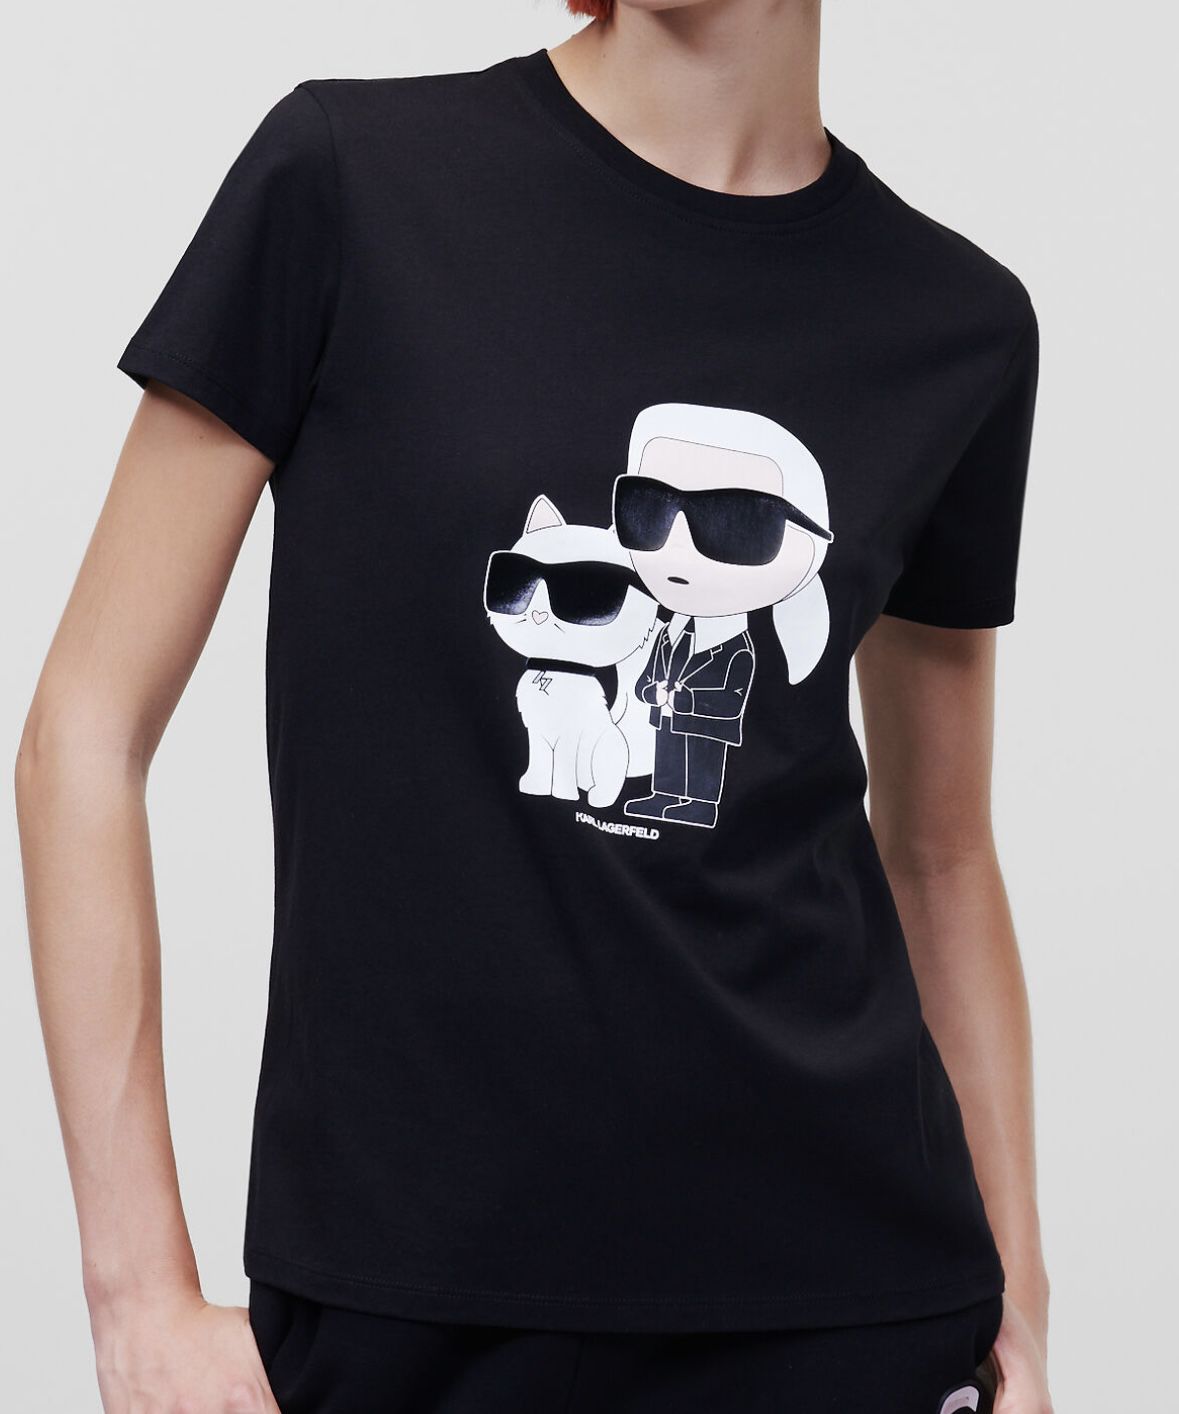 Karl Lagerfeld shirts